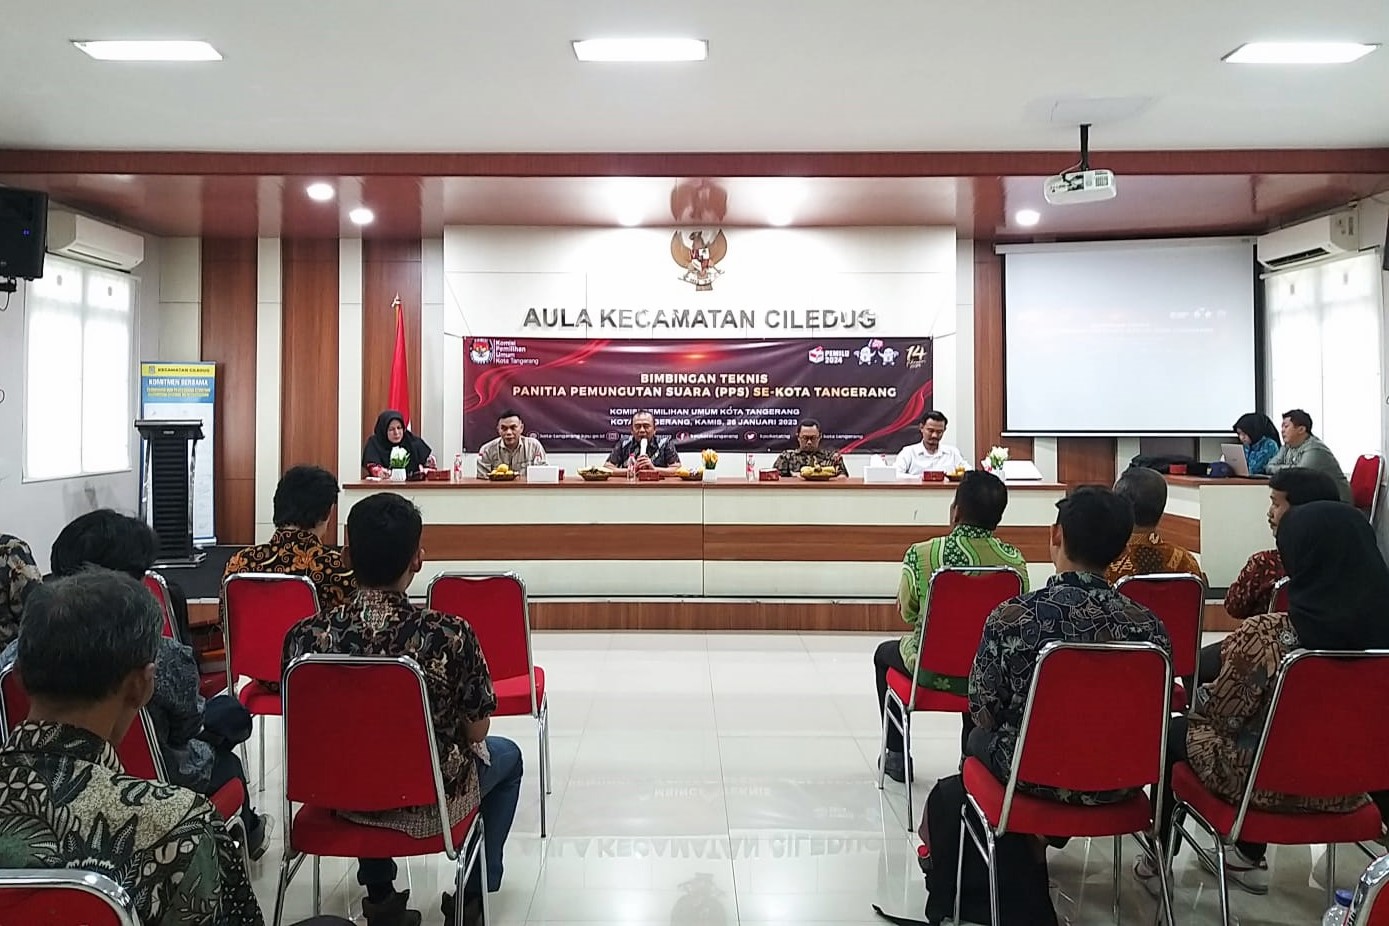 Kegiatan Bimbingan Teknis Panitia Pemungutan Suara (PPS) se-Kota Tangerang oleh KPU Kota Tangerang